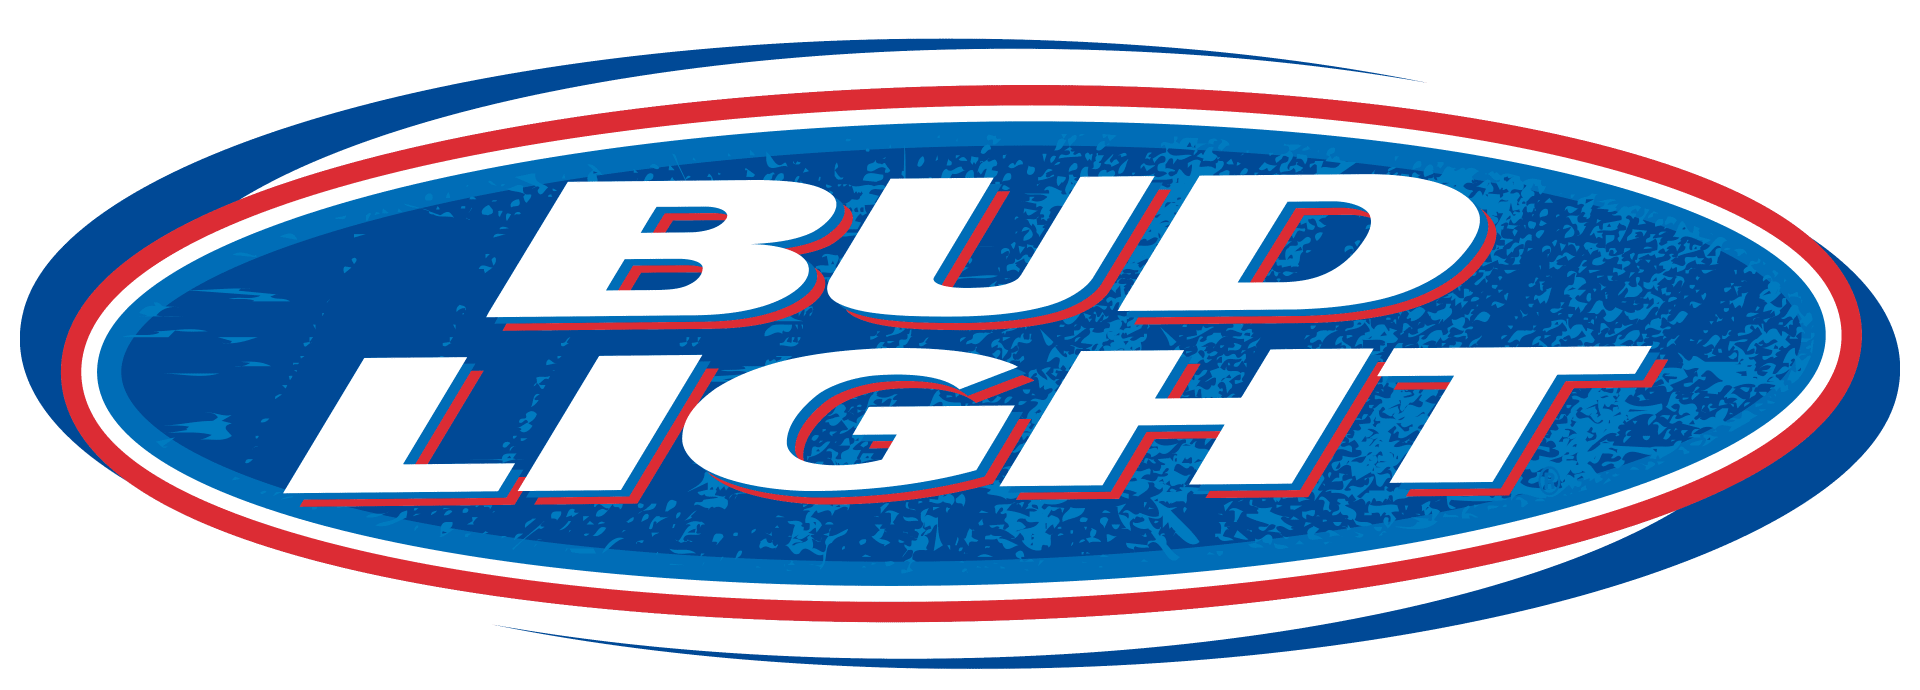 Bud Light PNG Image File